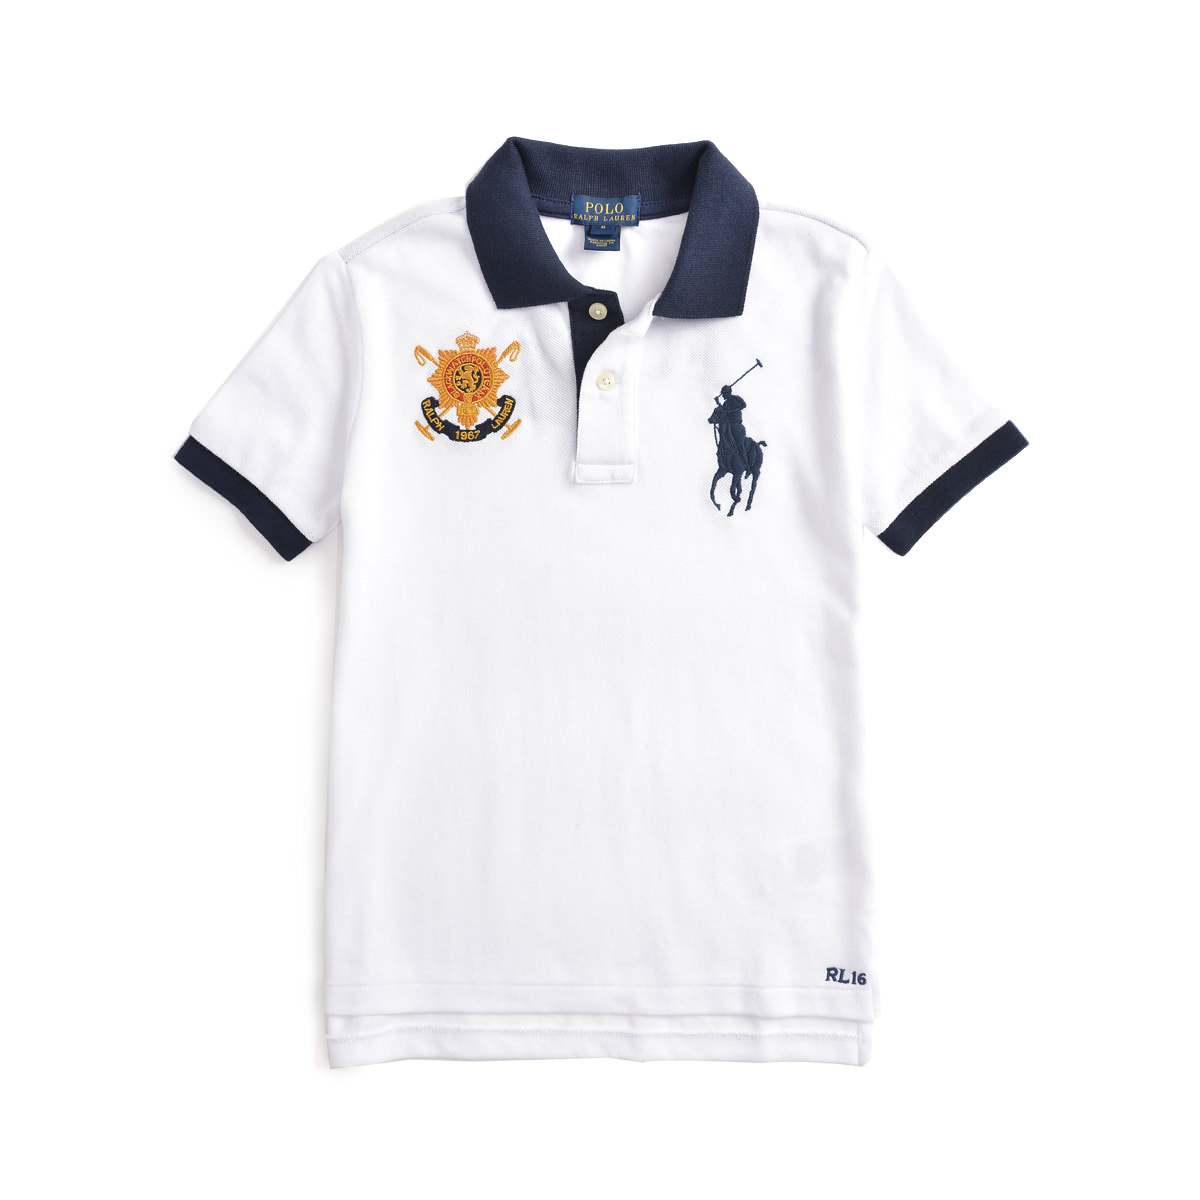 customized ralph lauren polo shirts with logo